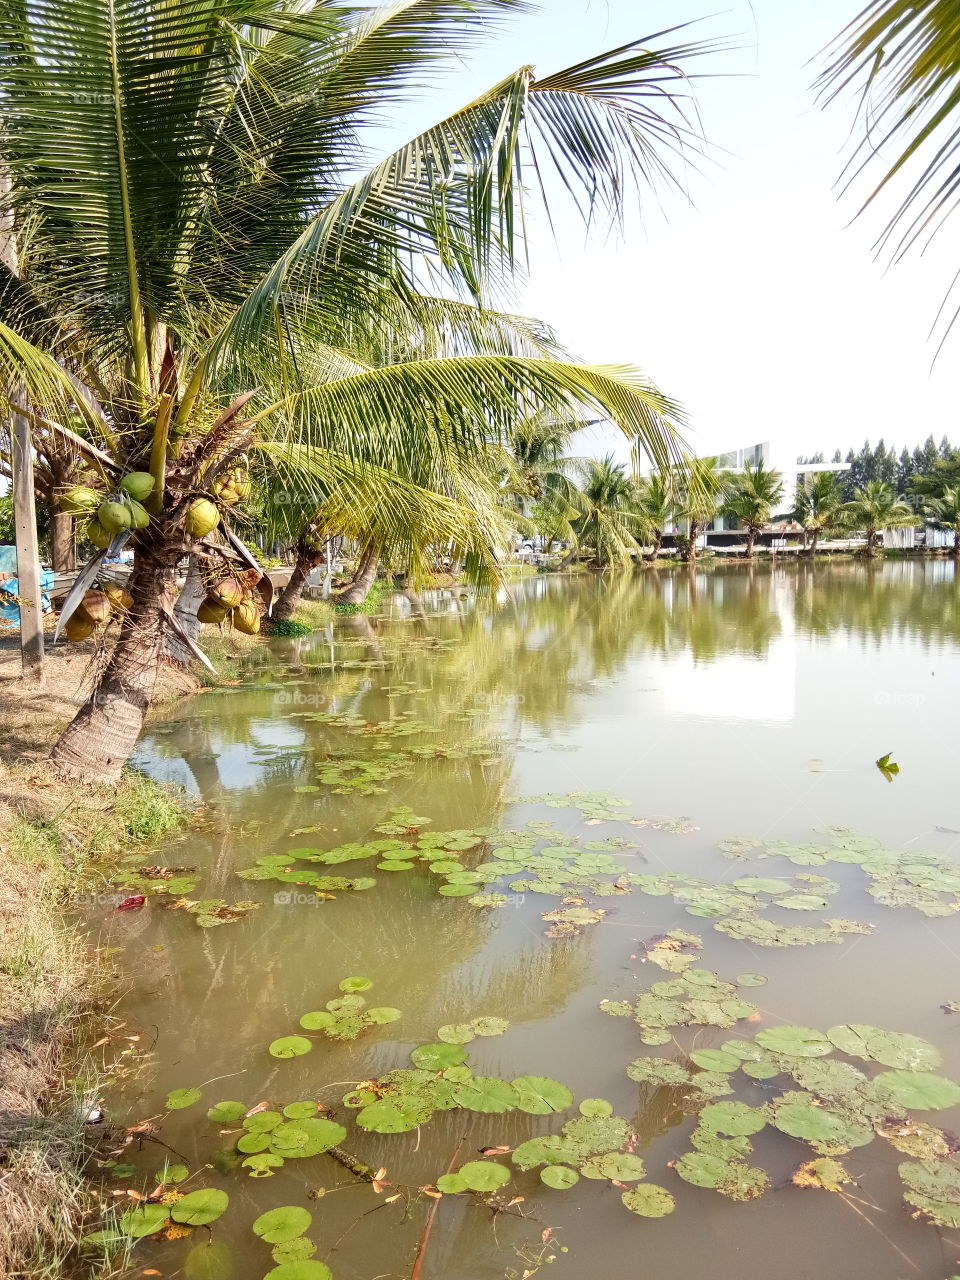 coconut
tree
lotus
lake
water